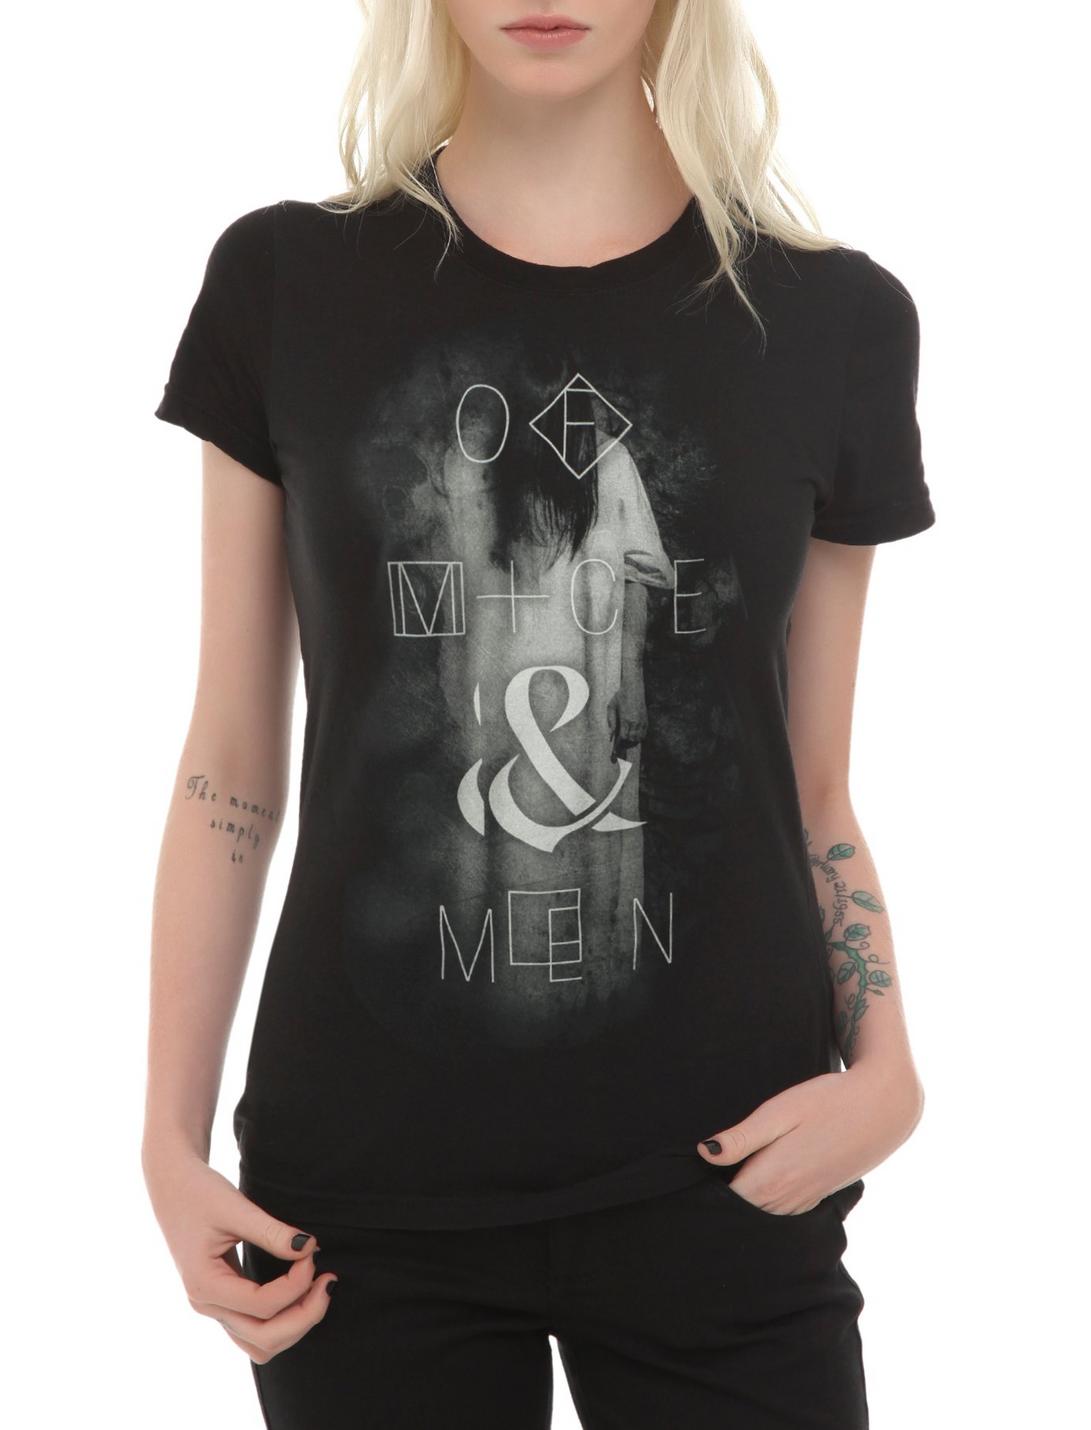 Of Mice & Men Scary Lady Girls T-Shirt, BLACK, hi-res